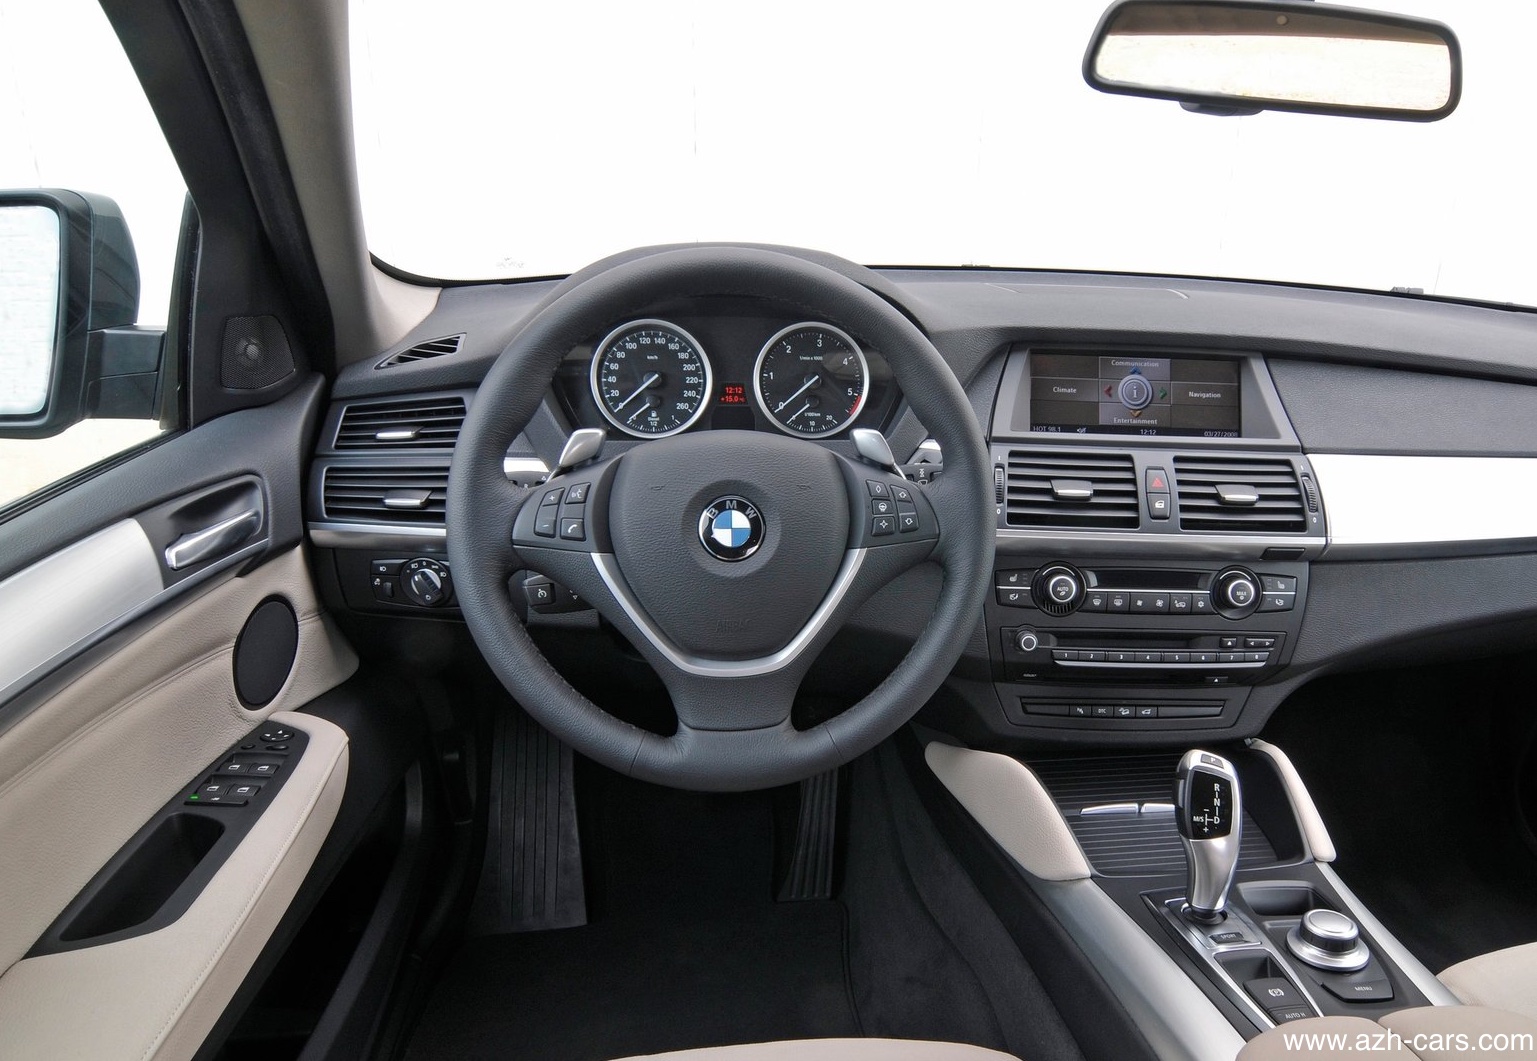 Комплектации x6. BMW x6 2008 салон. БМВ x6 2012 салон. BMW x6 е71 салон. BMW x6 2008 Interior.